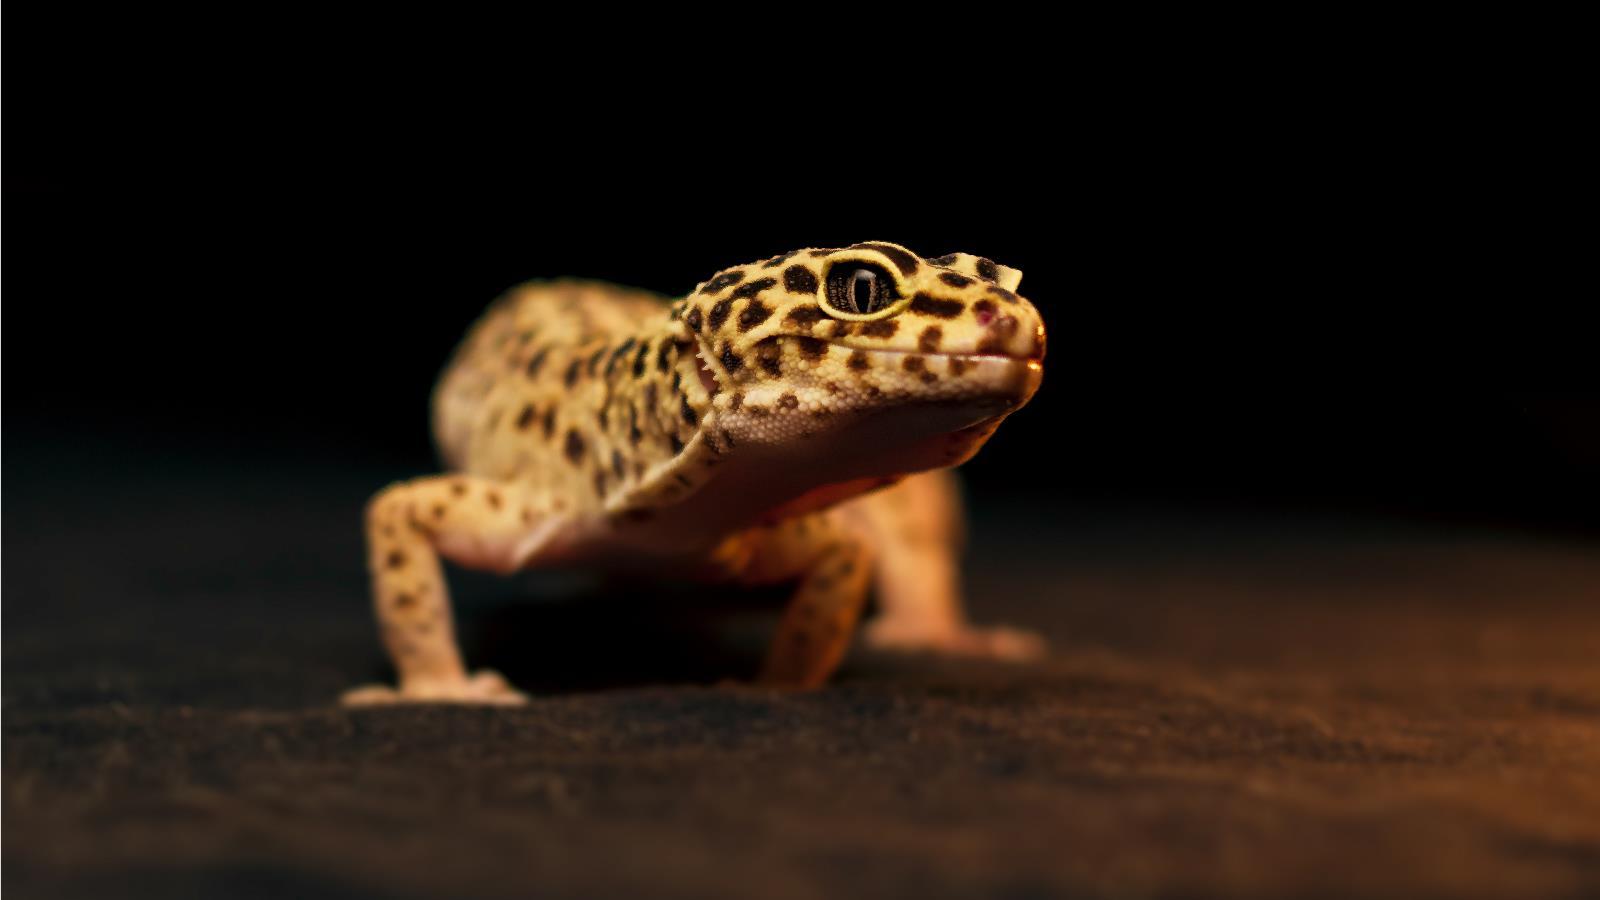 Leopard Gecko Pictures  Download Free Images on Unsplash